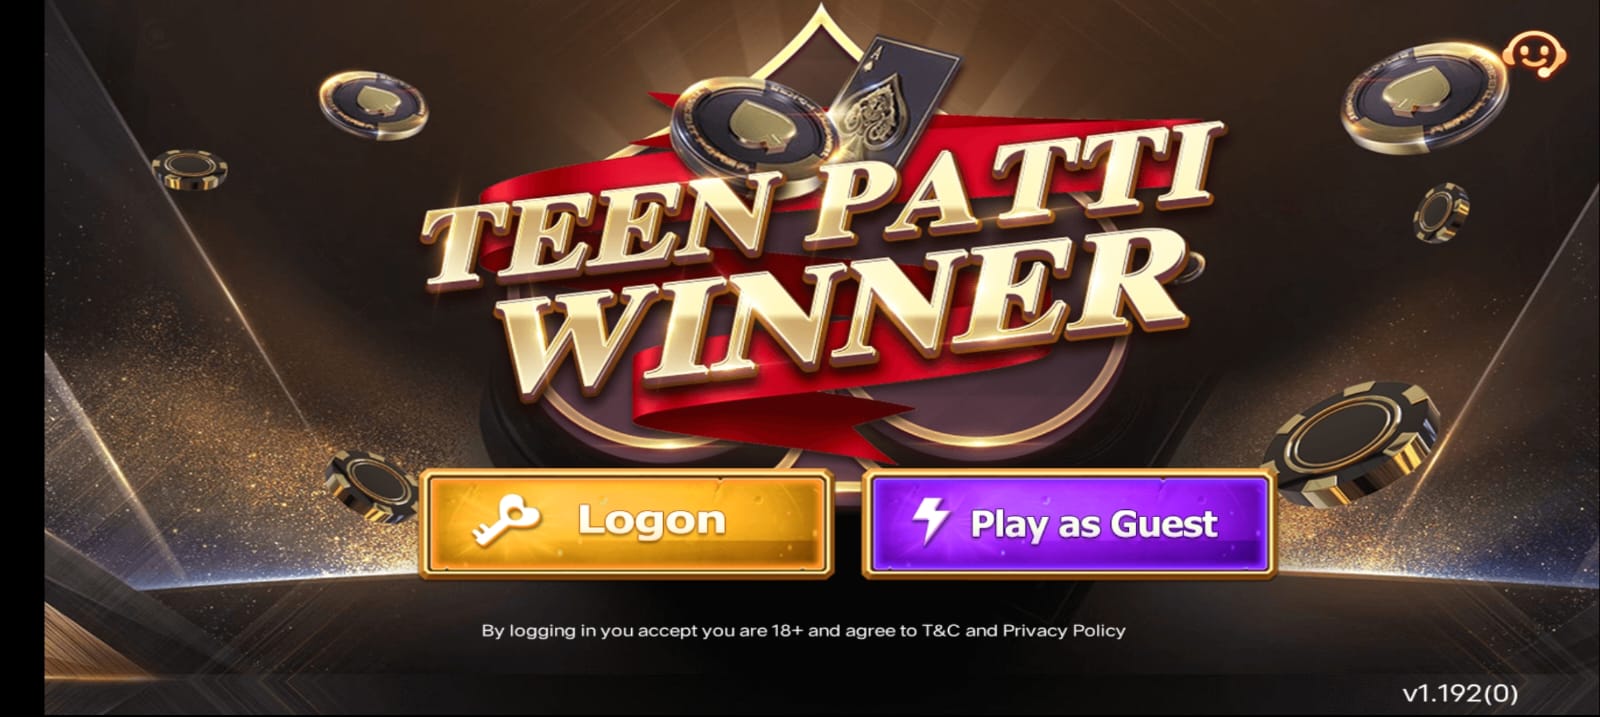 Register In Teen Patti Winner App